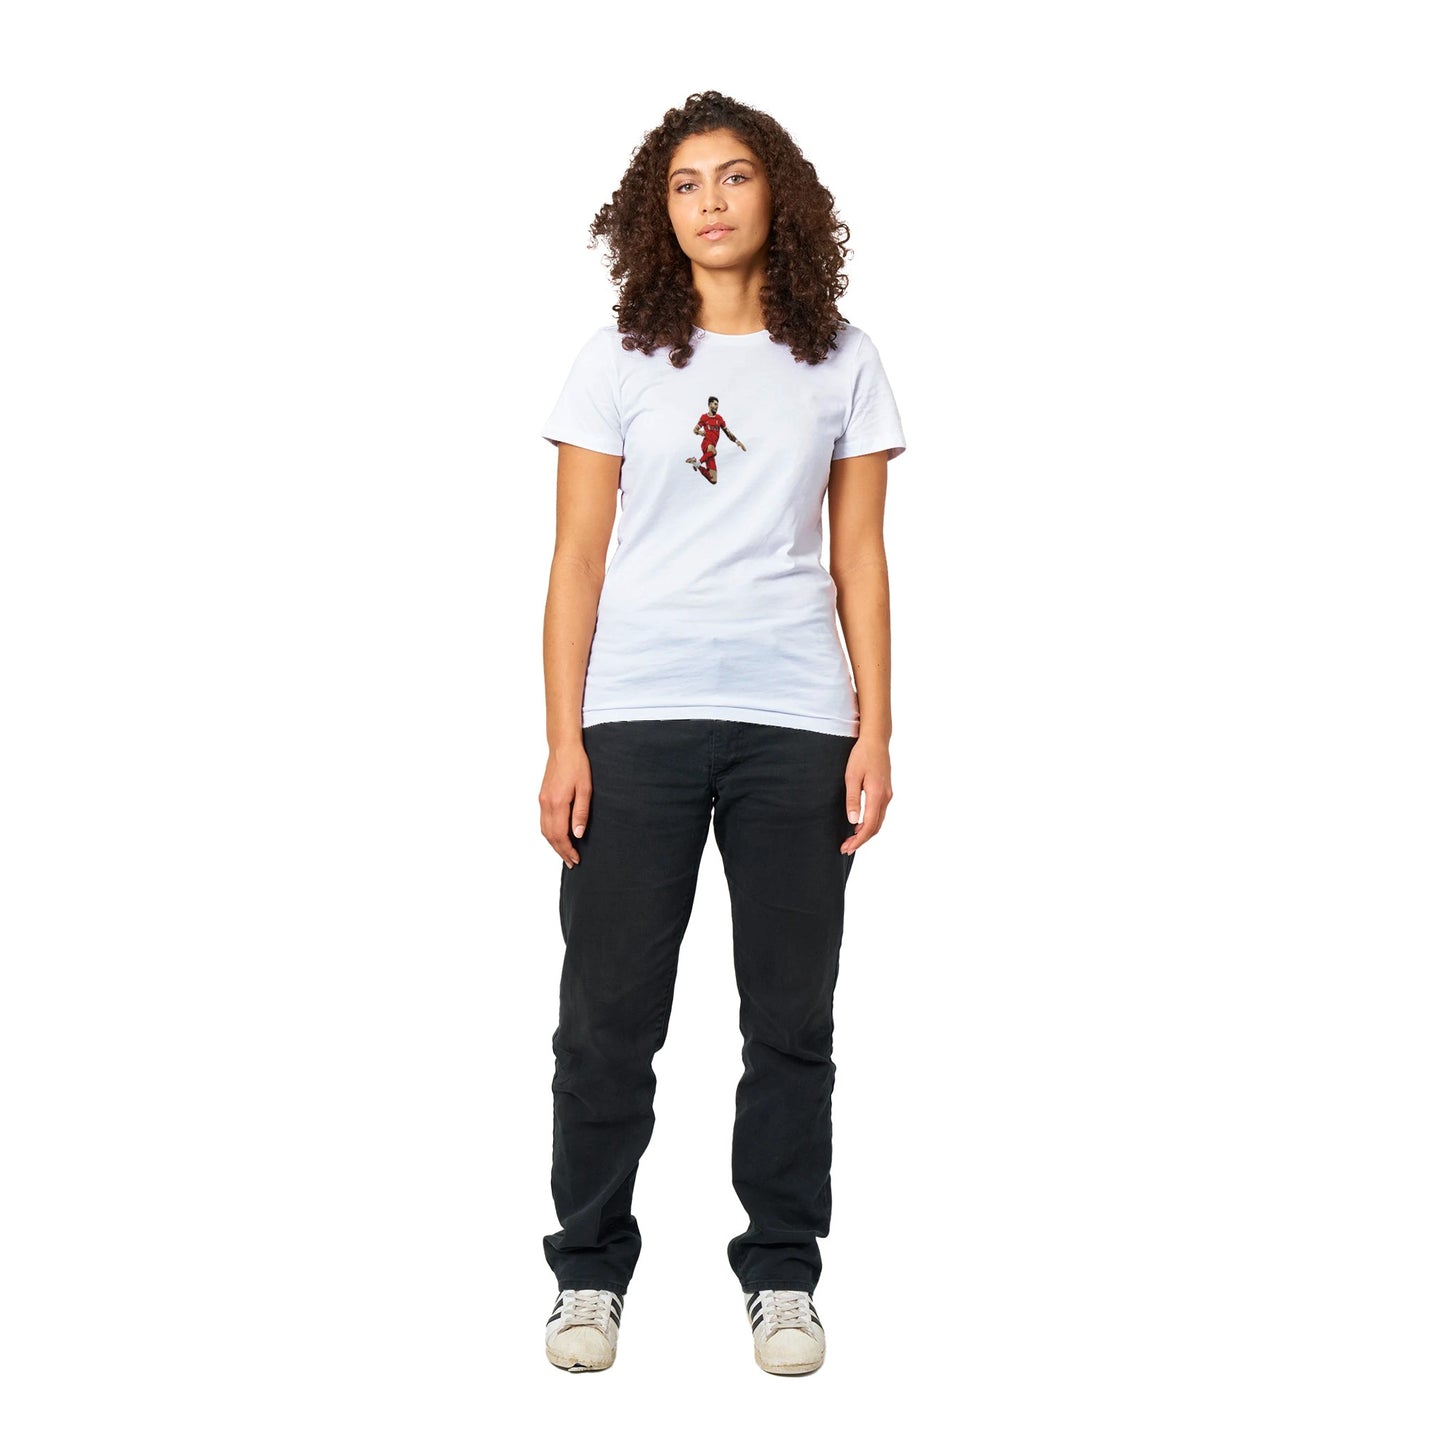 Szobo - LFC - Premium Unisex Crewneck T-shirt - Premium Womens Crewneck T-shirt